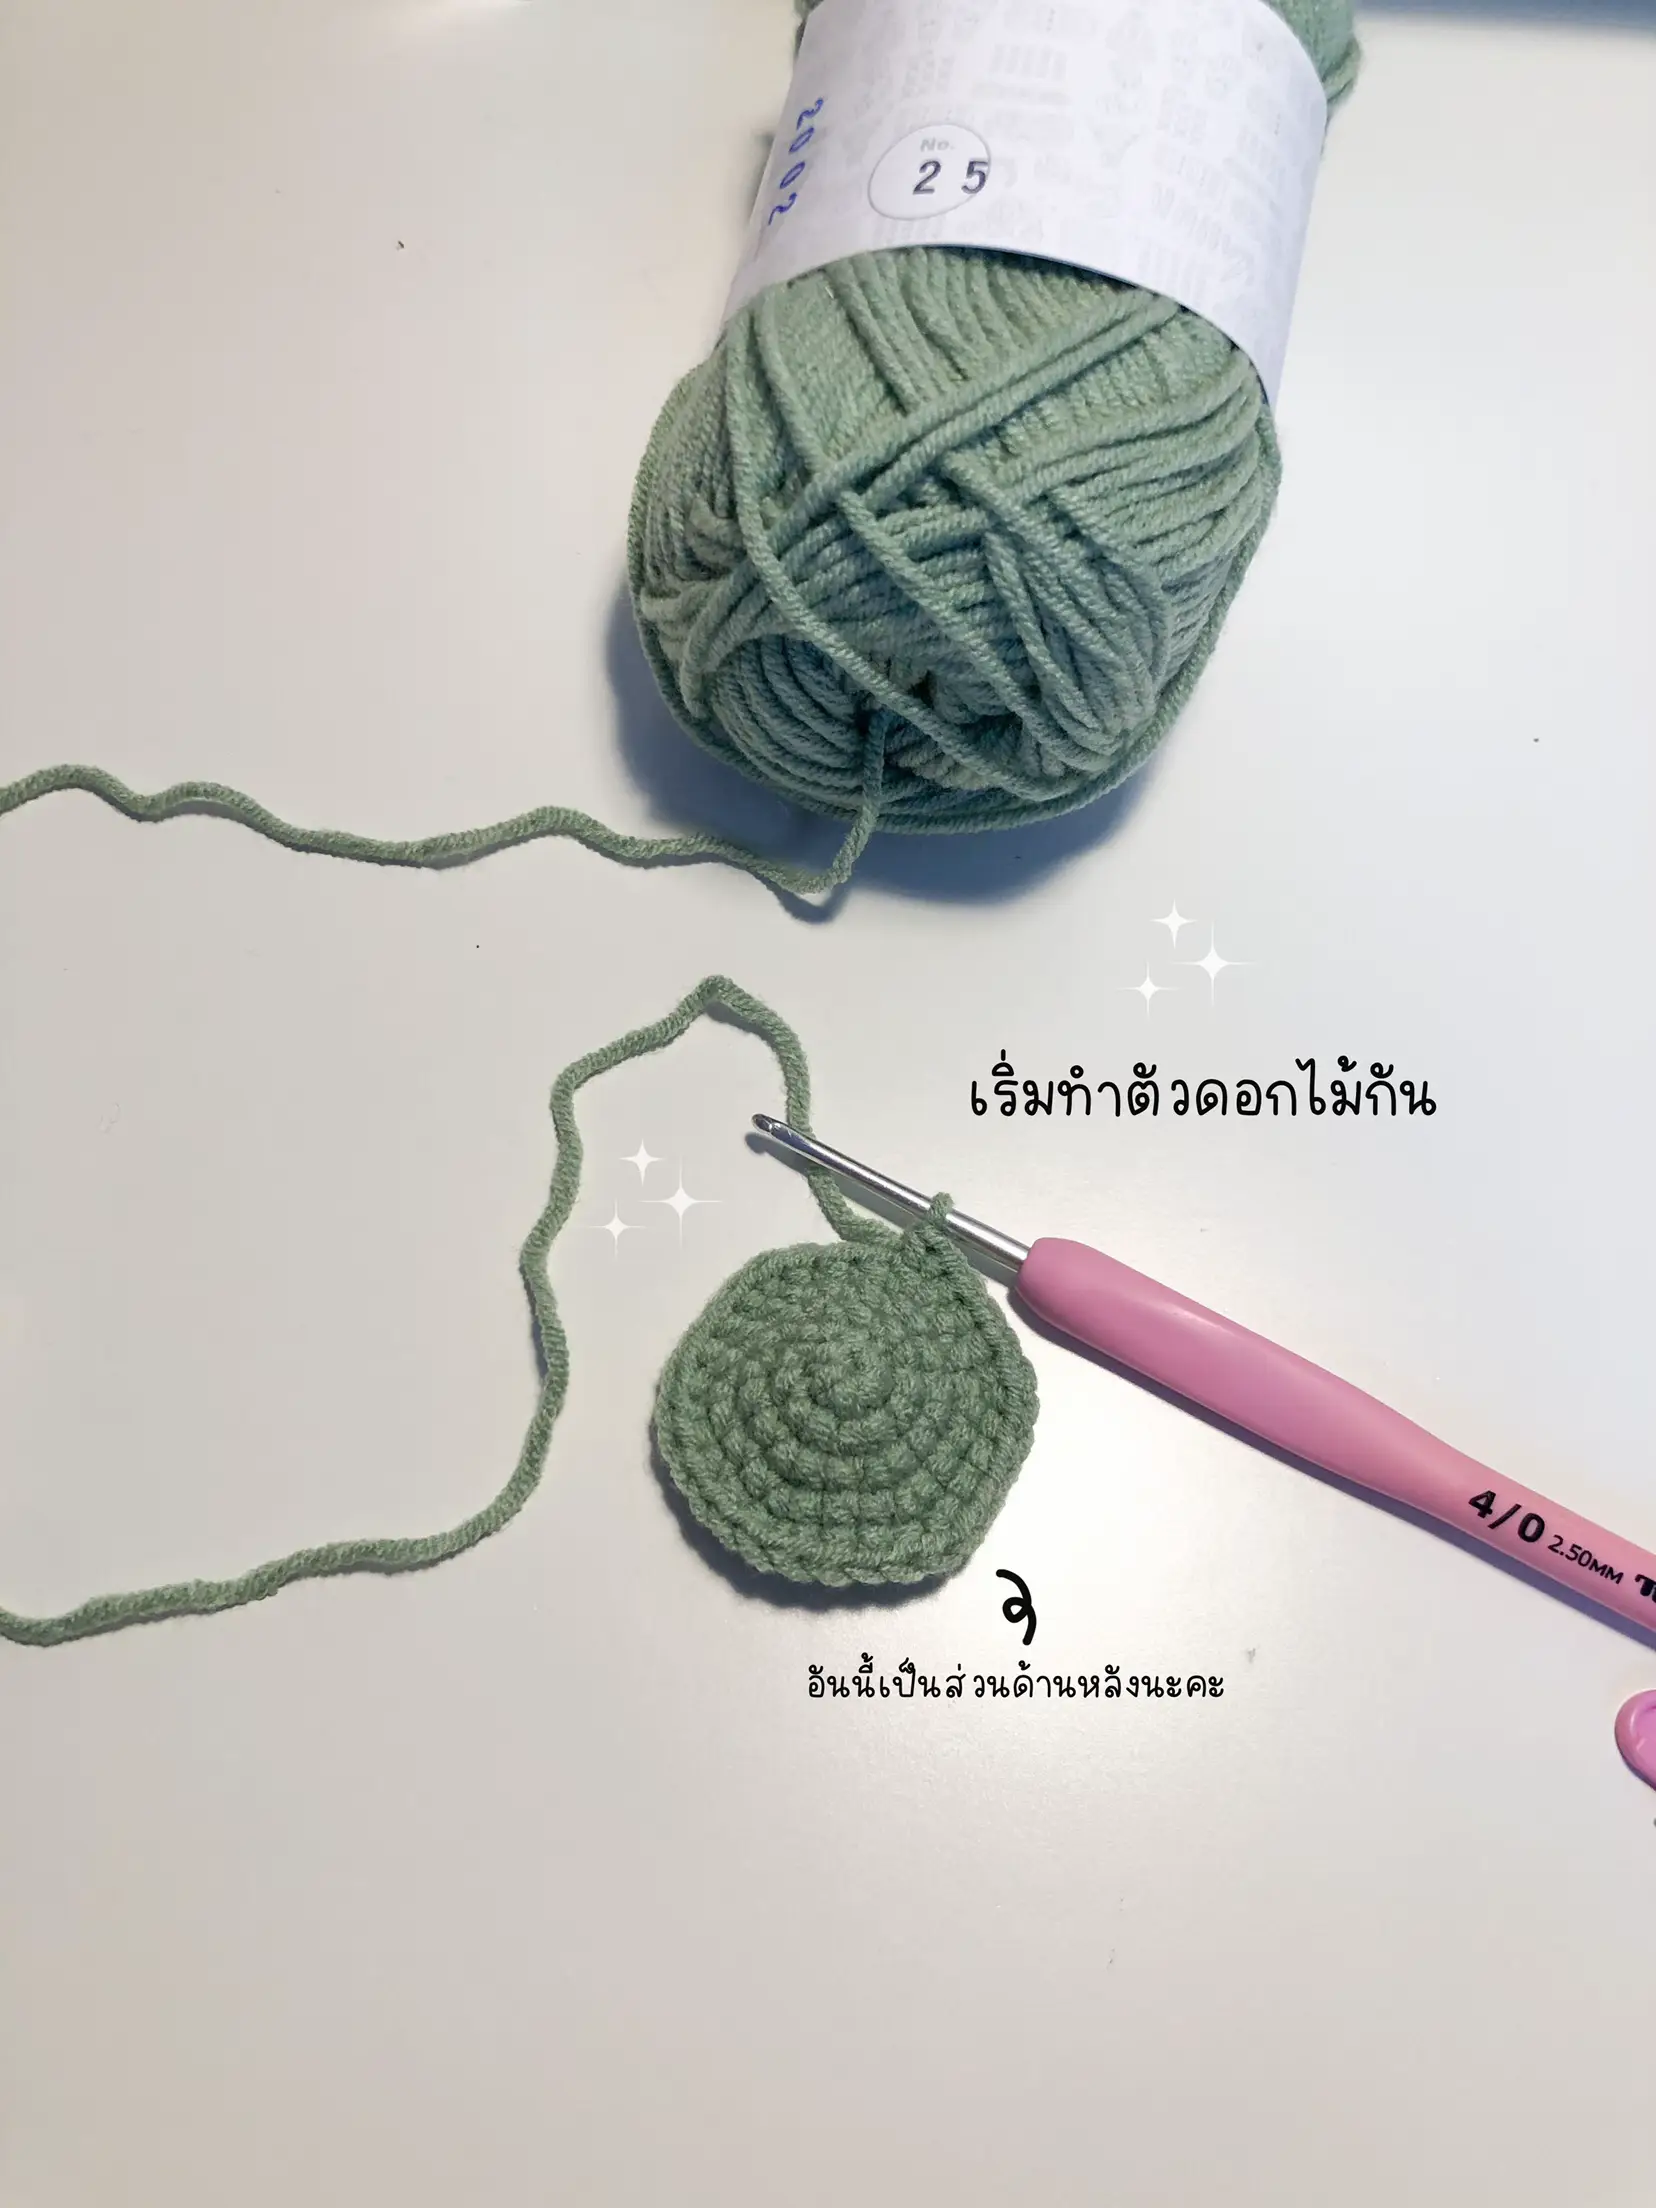 Check out my cool repurposed stitch counter! #crochet #yarn #yarntok #